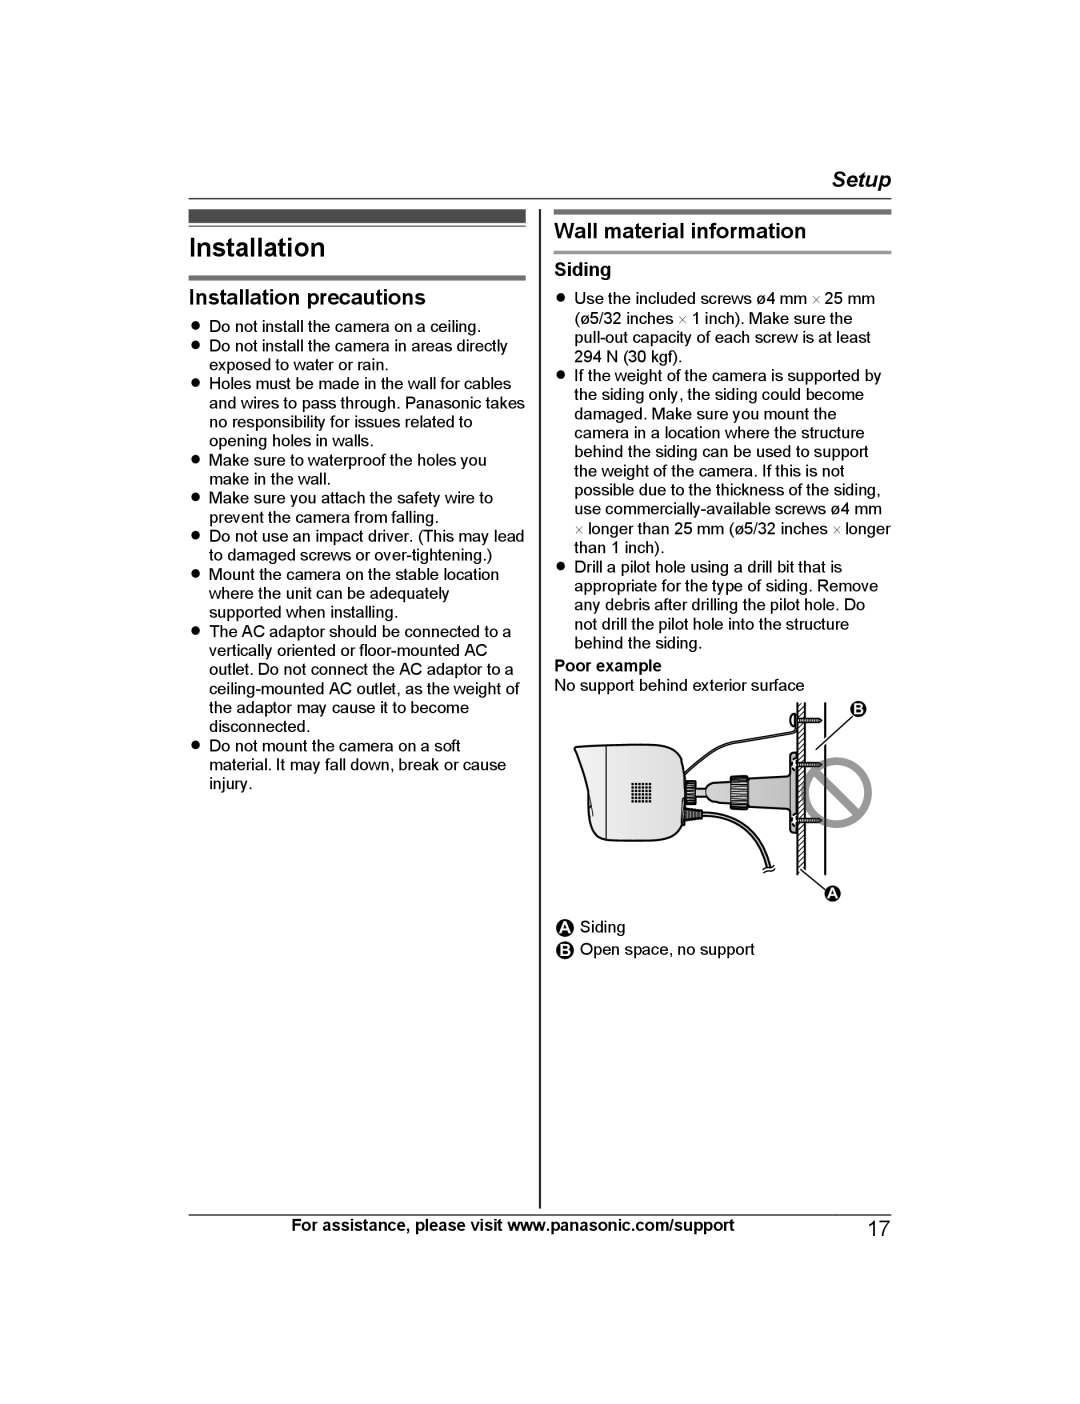 Panasonic KX-HNC600 manual Installation precautions, Wall material information, Setup 